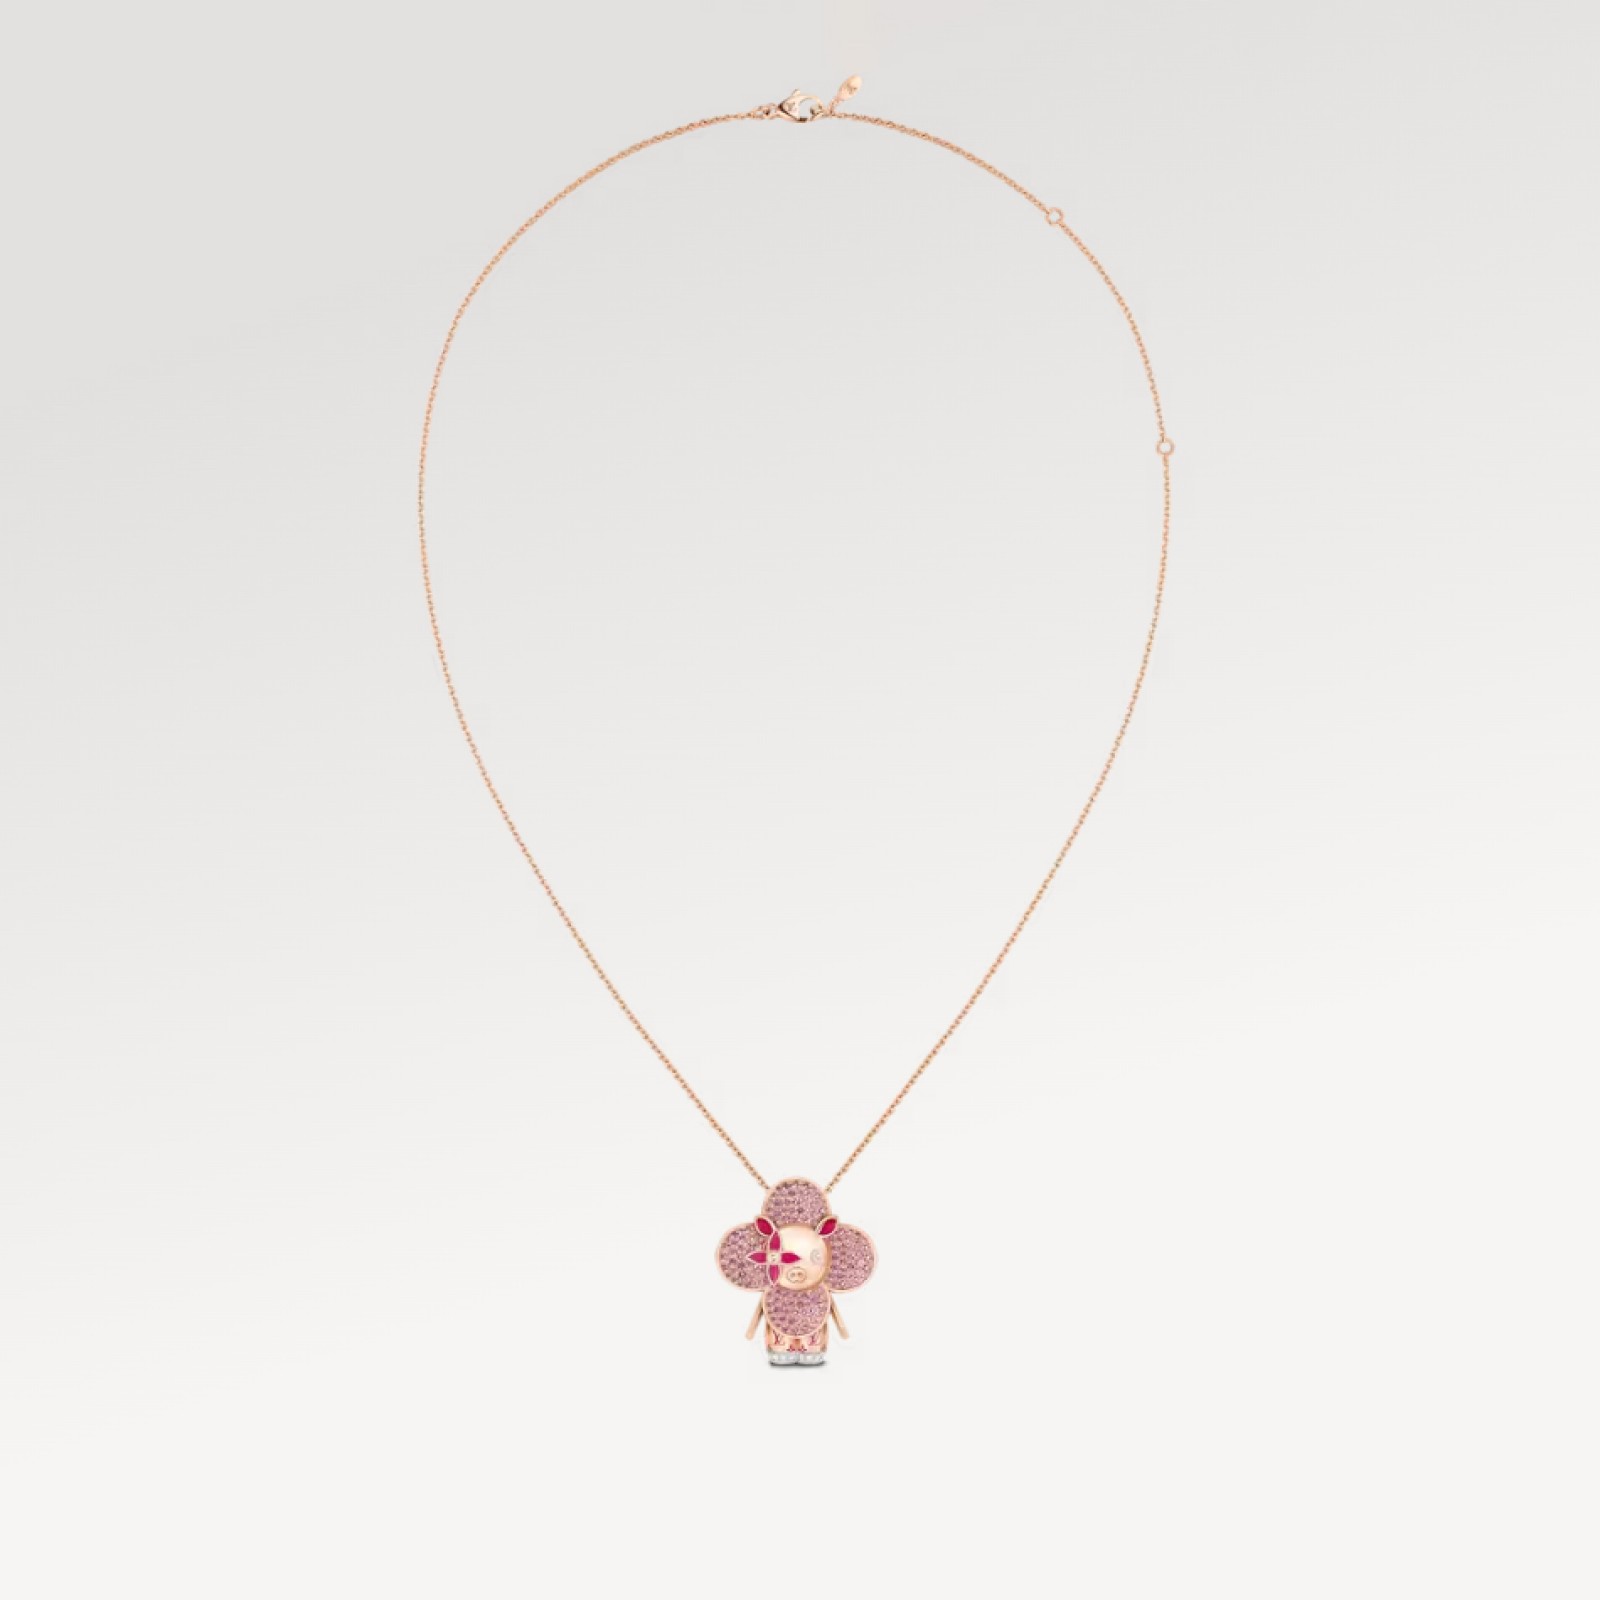 Vivienne Pig Pendant, Pink Gold, Lacquer, Diamonds & Colored Gemstones